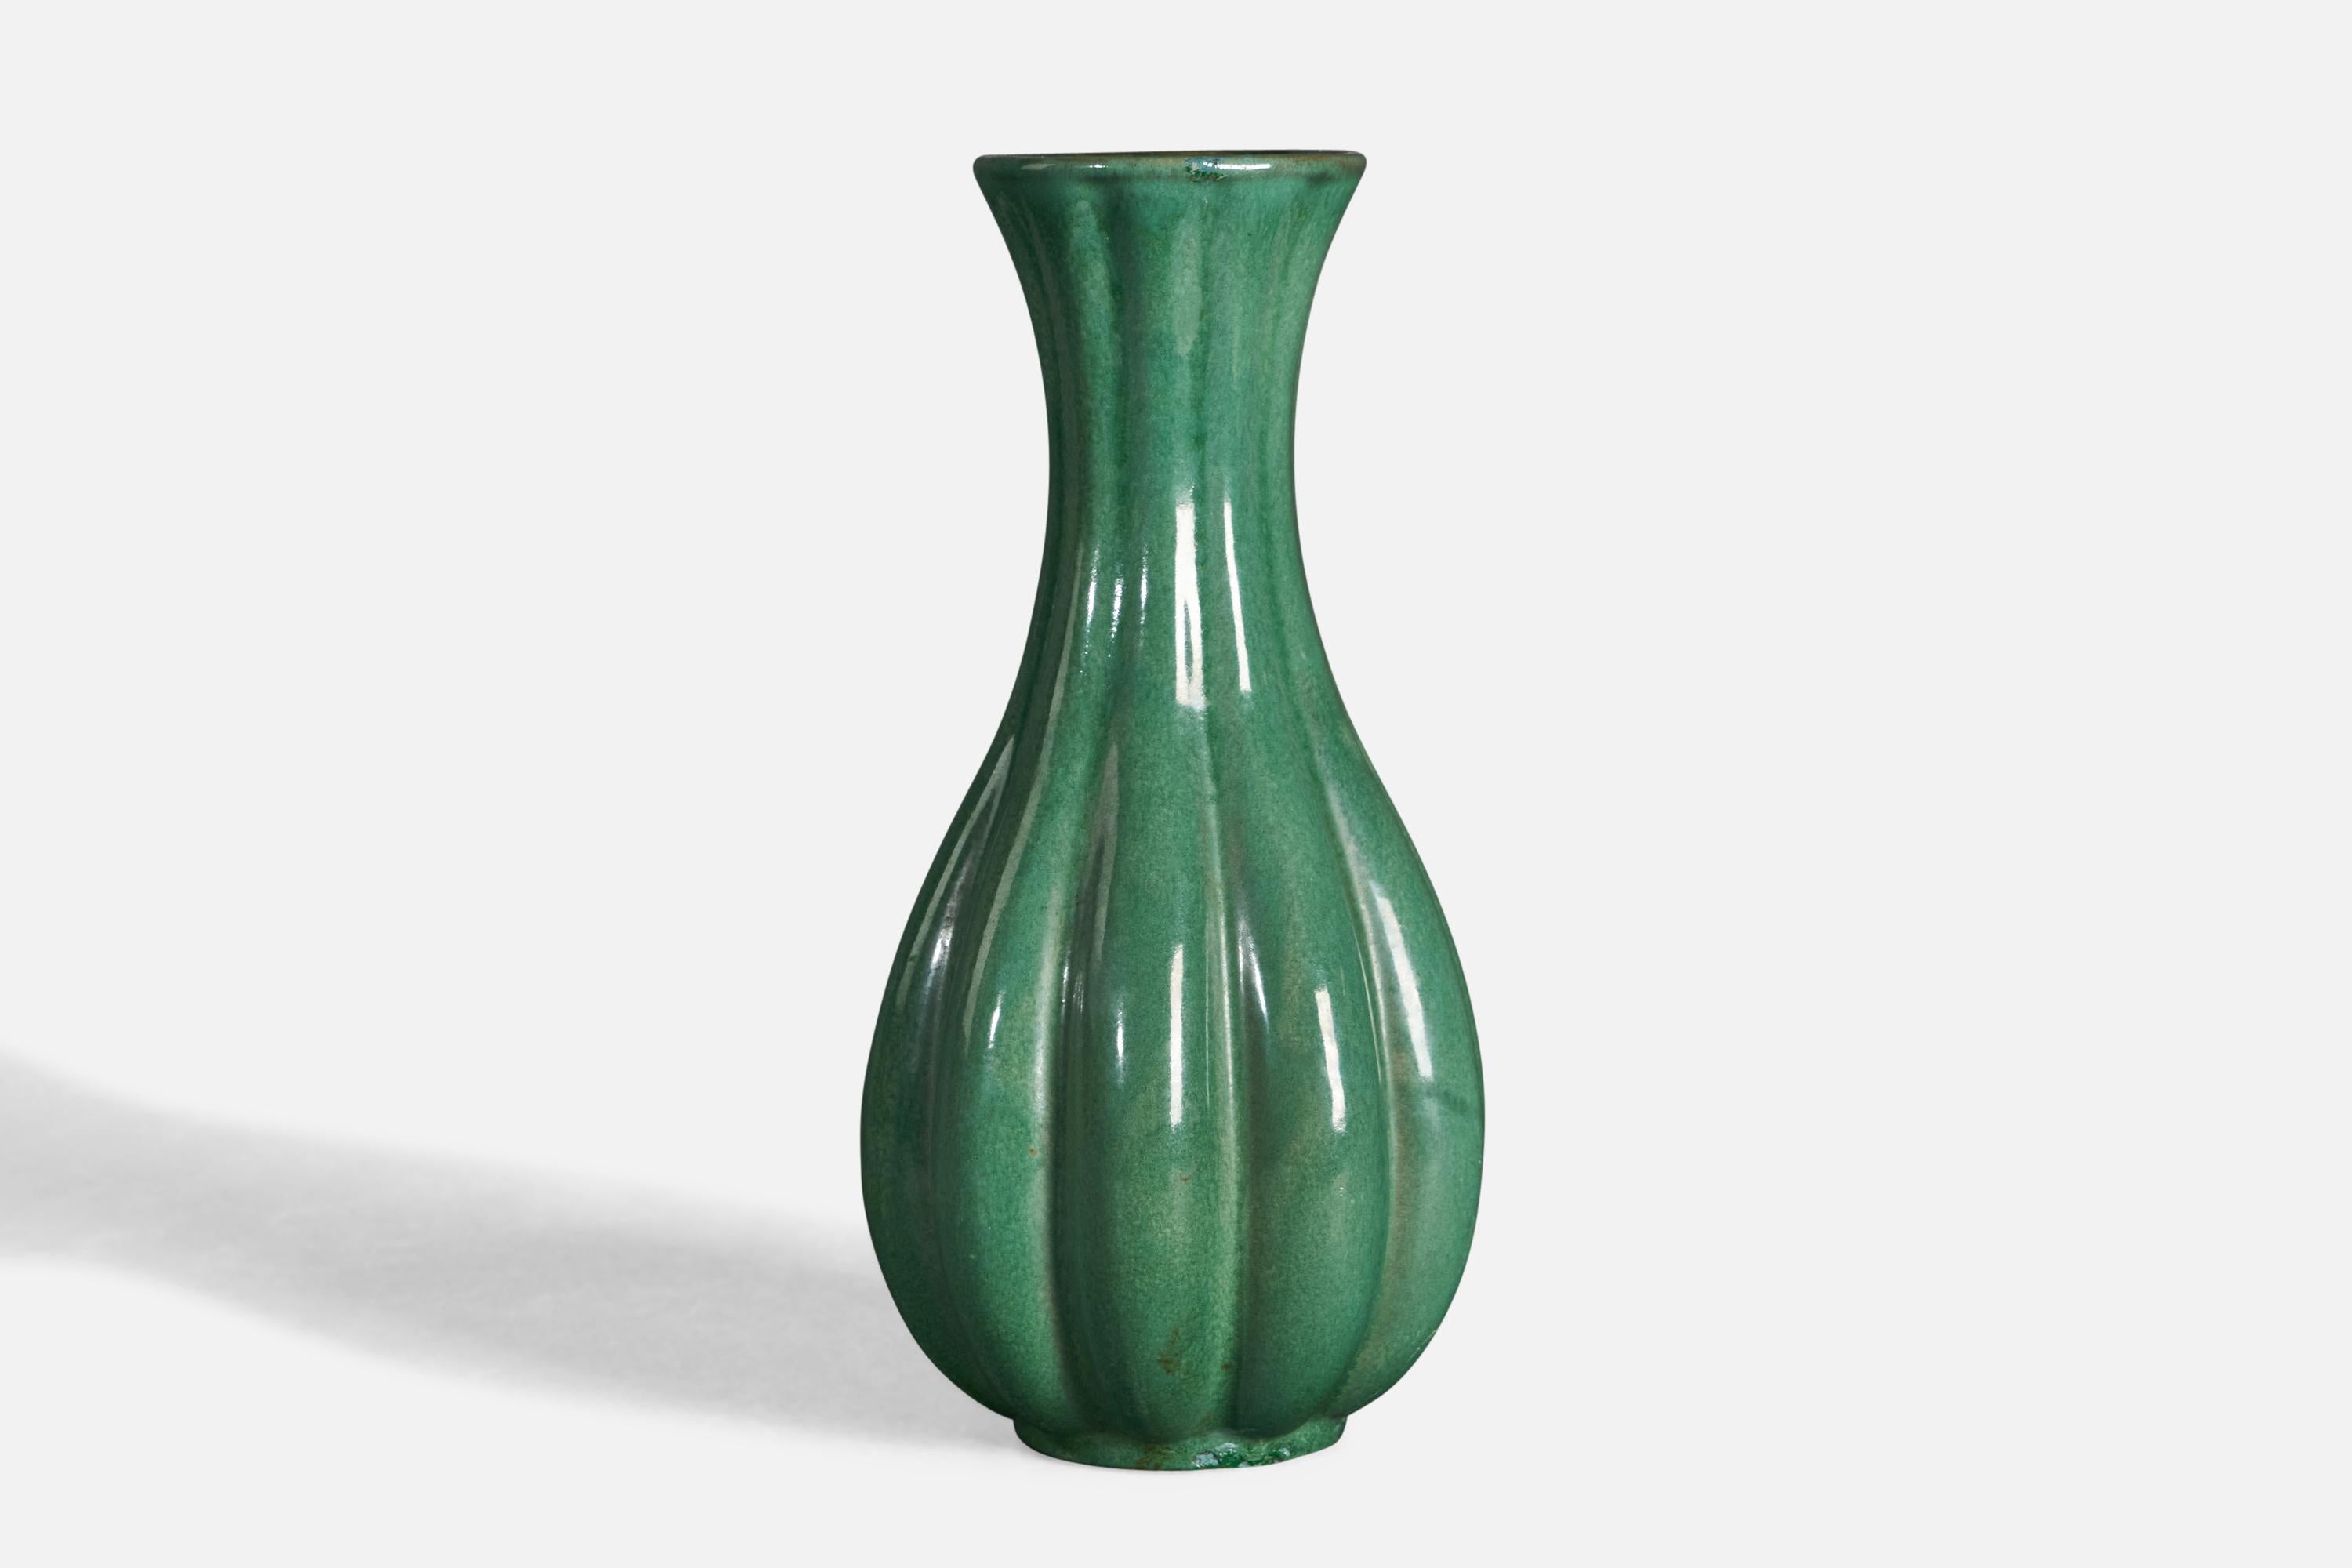 A green-glazed earthenware vase, designed and produced by Upsala Ekeby, Sweden, 1930s.